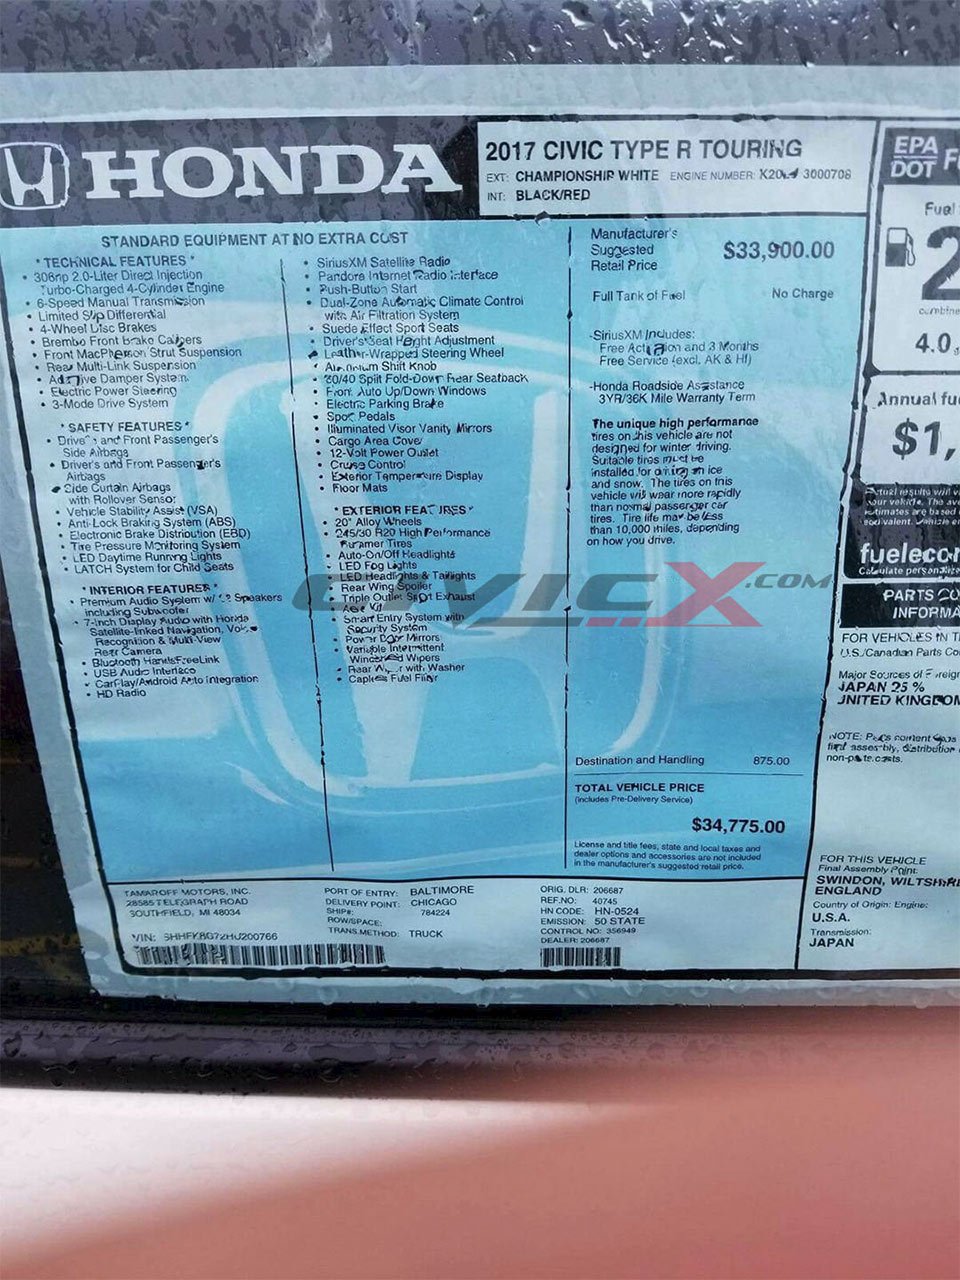 Honda Civic Type R Price Revealed by Window Sticker